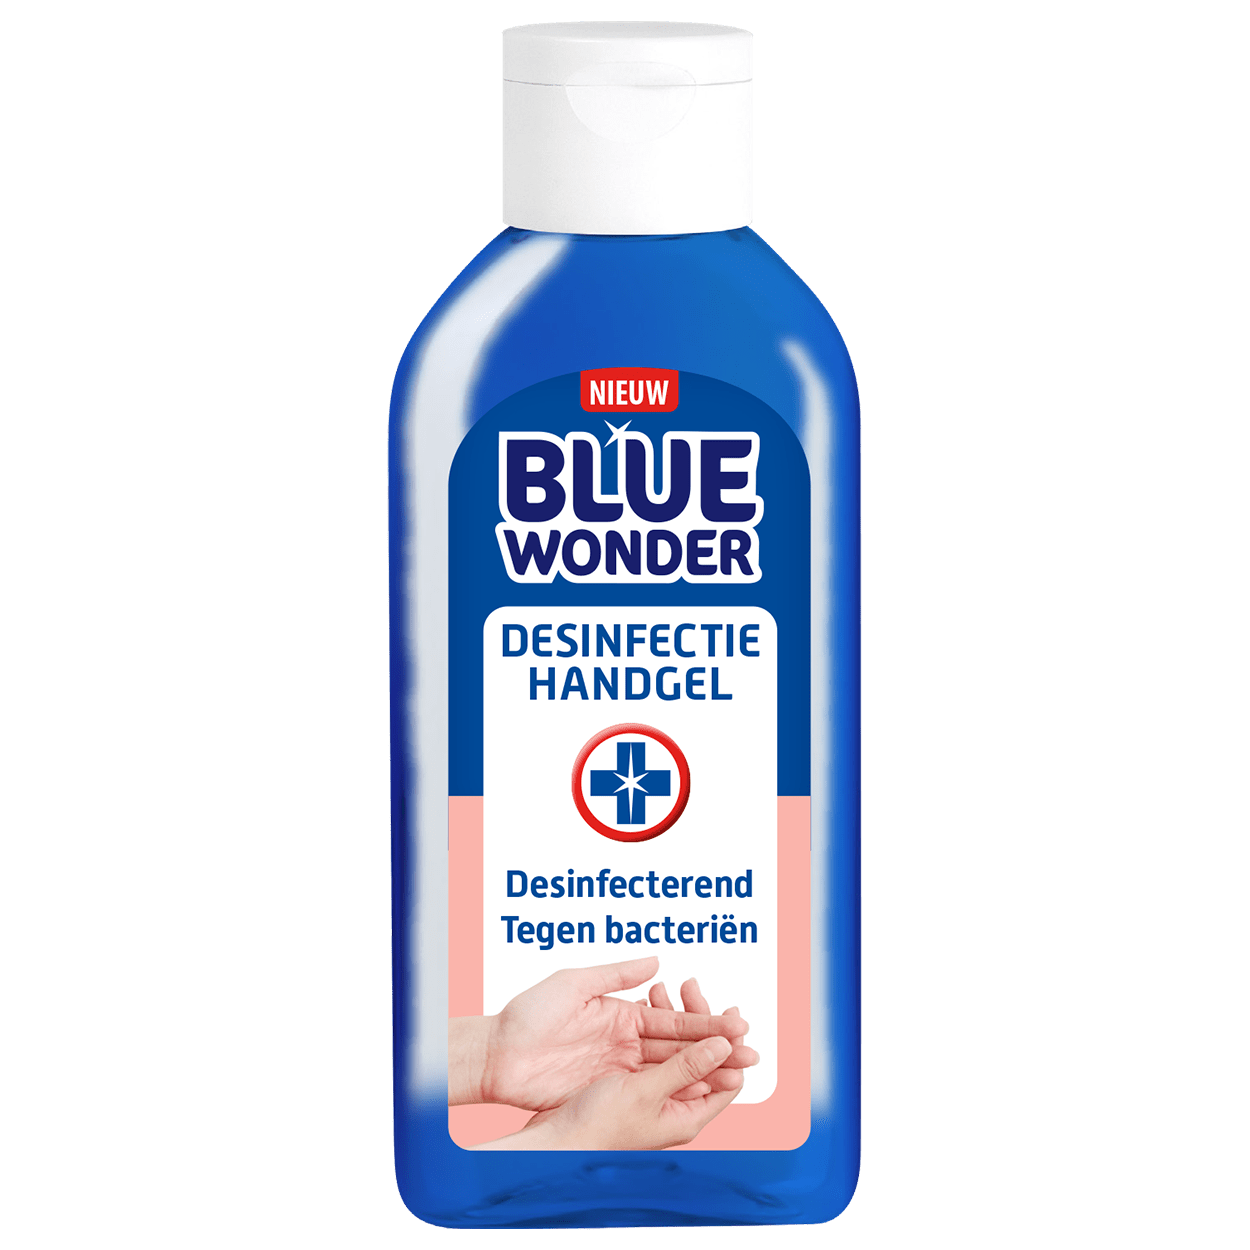 8712038002414 Blue Wonder Desinfectie Handgel 100ml 2020 12 01 front 102020